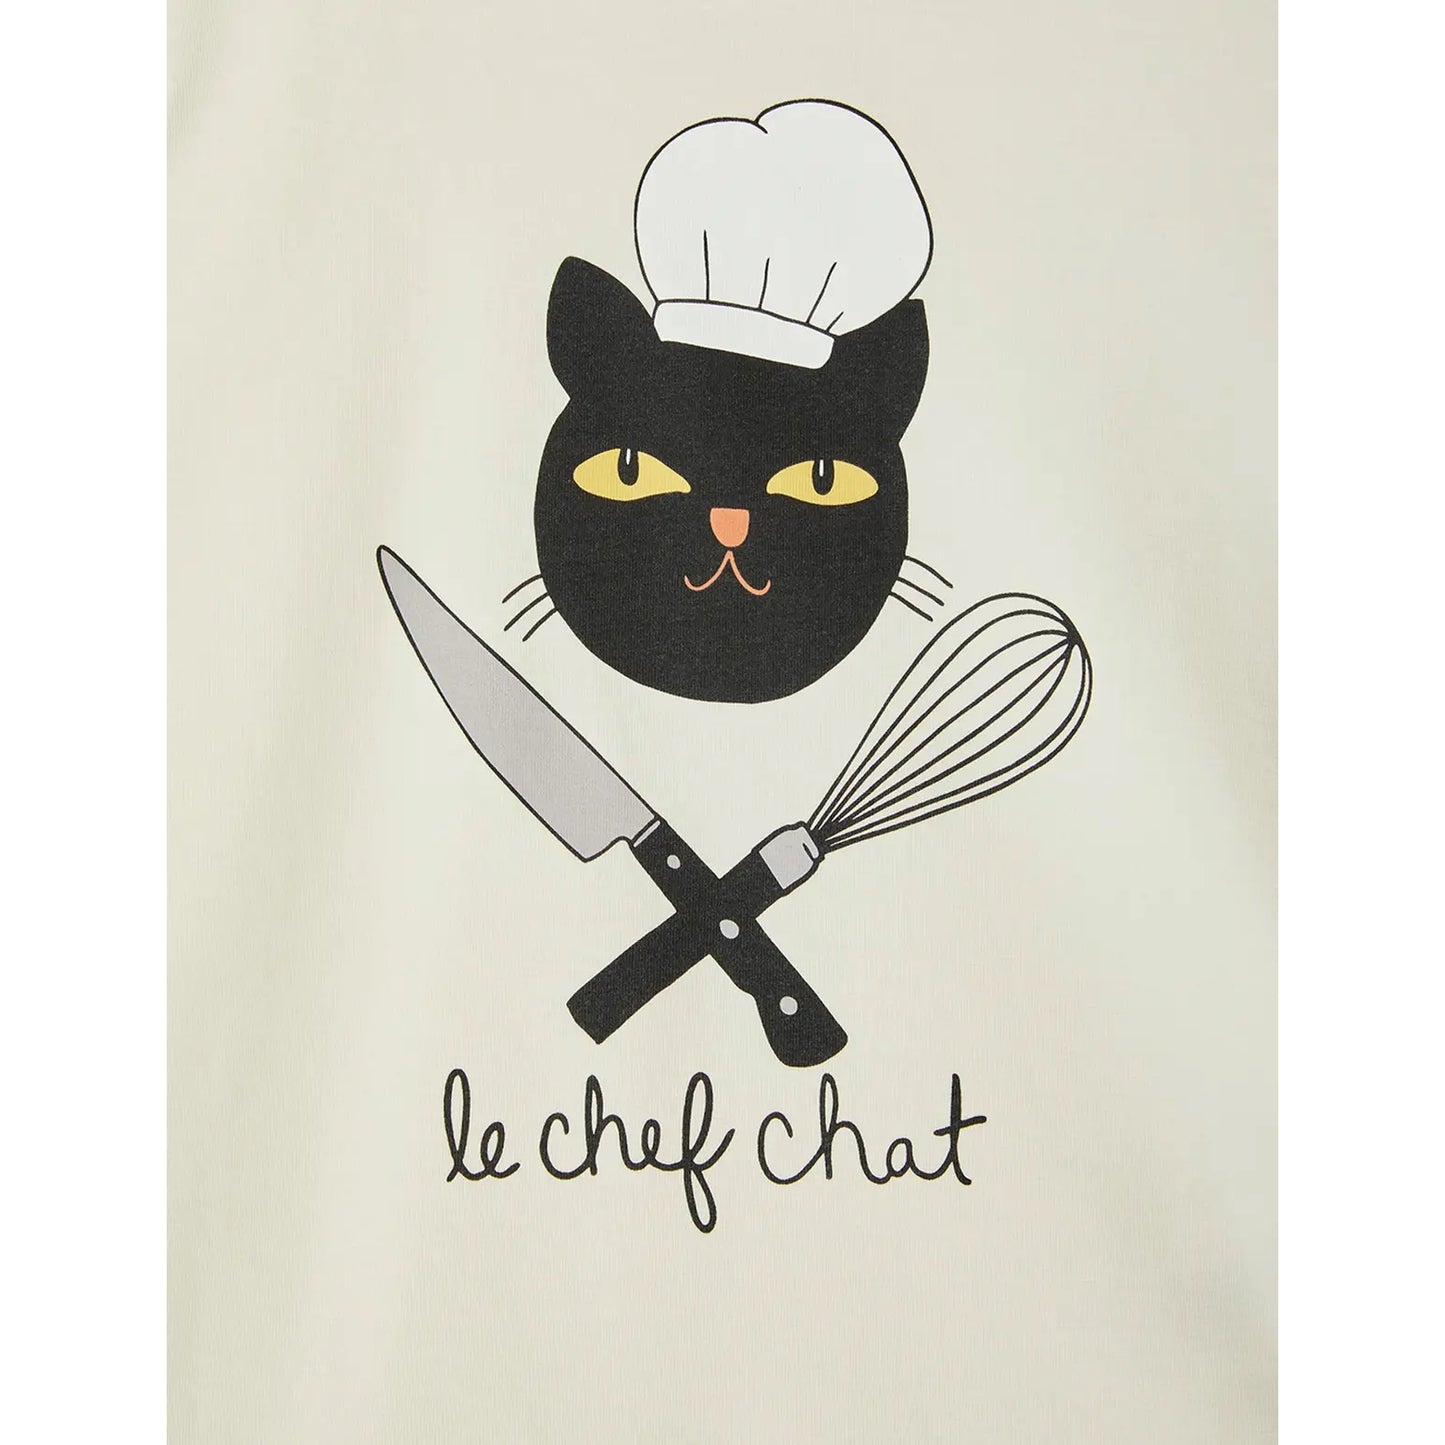 MINI RODINI Chef Cat T-Shirt ALWAYS SHOW